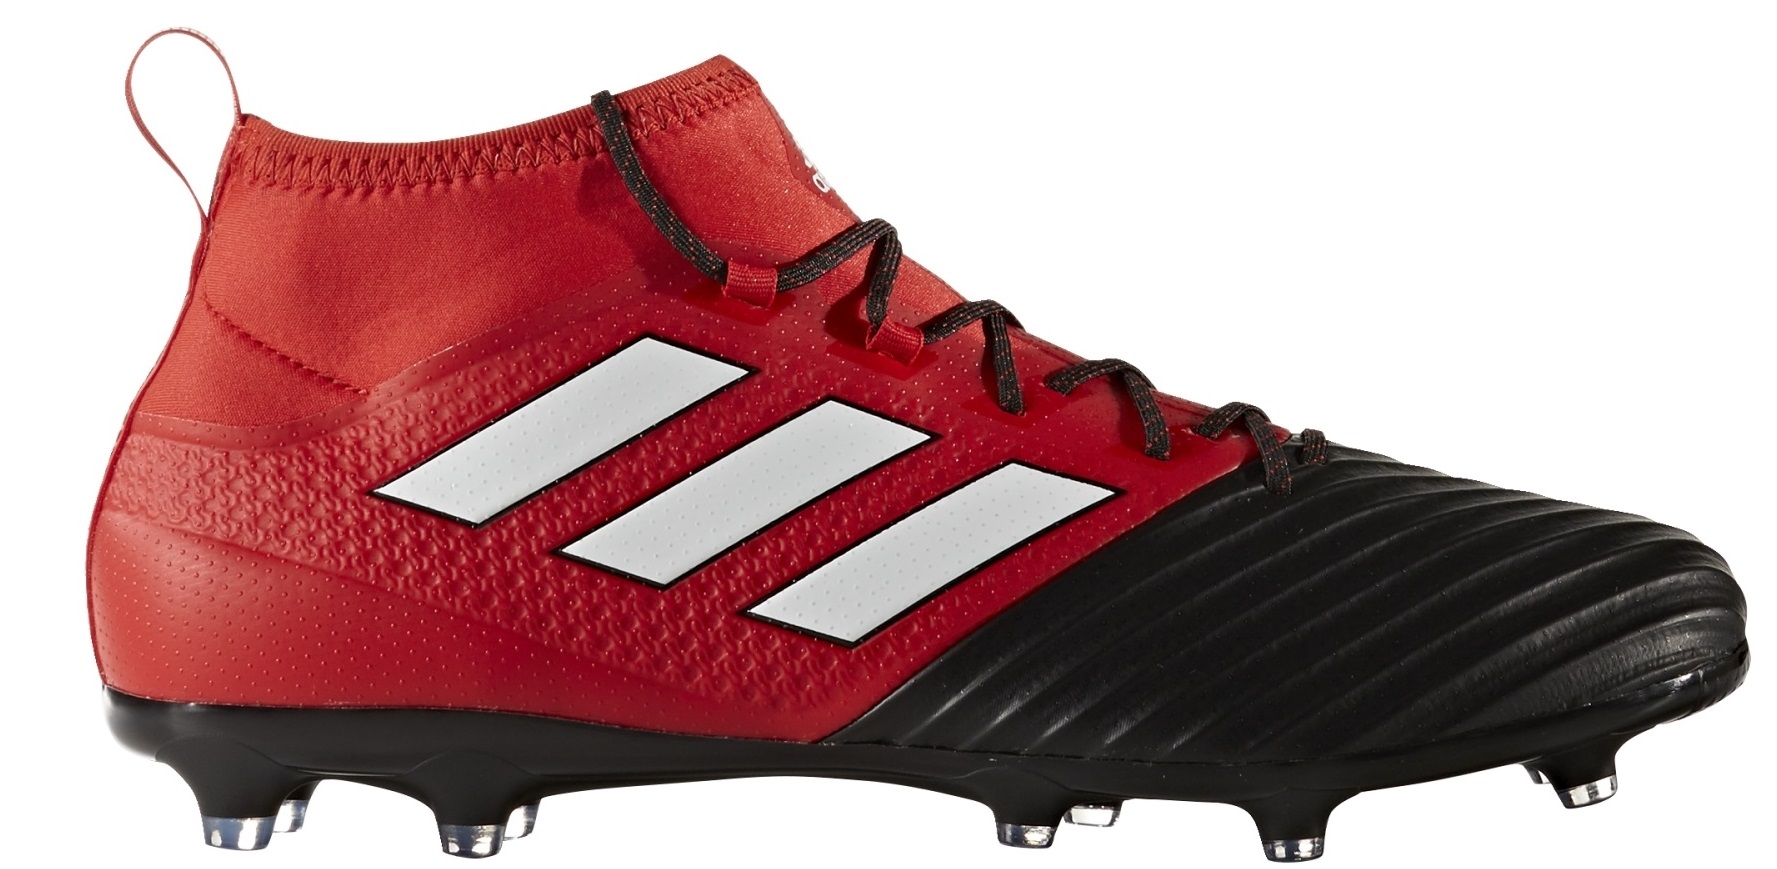 Scarpe Calcio Adidas Ace 17.2 Primemesh FG Red Limit Pack colore Rosso Nero  - Adidas - SportIT.com